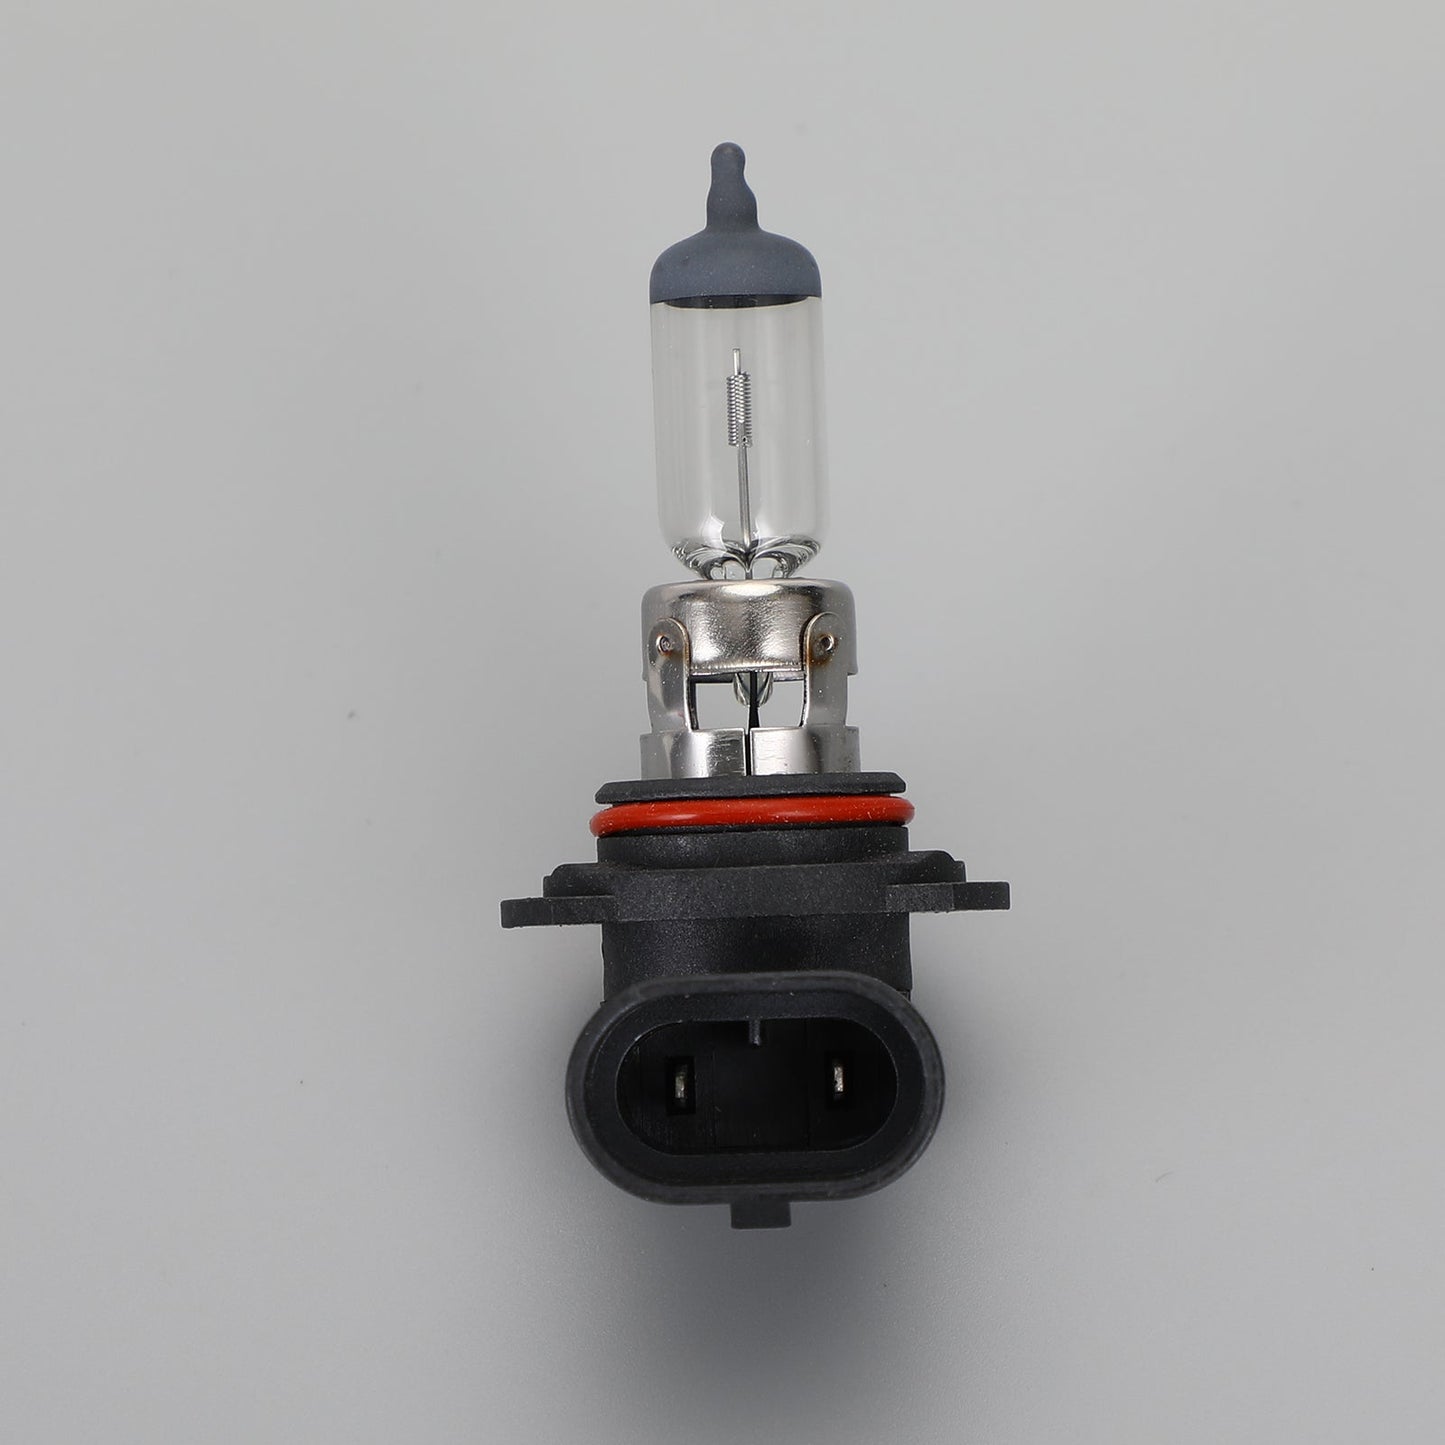 HB4 For NARVA 41006 Halogen Car Headlight Lamp 12V55W P22d